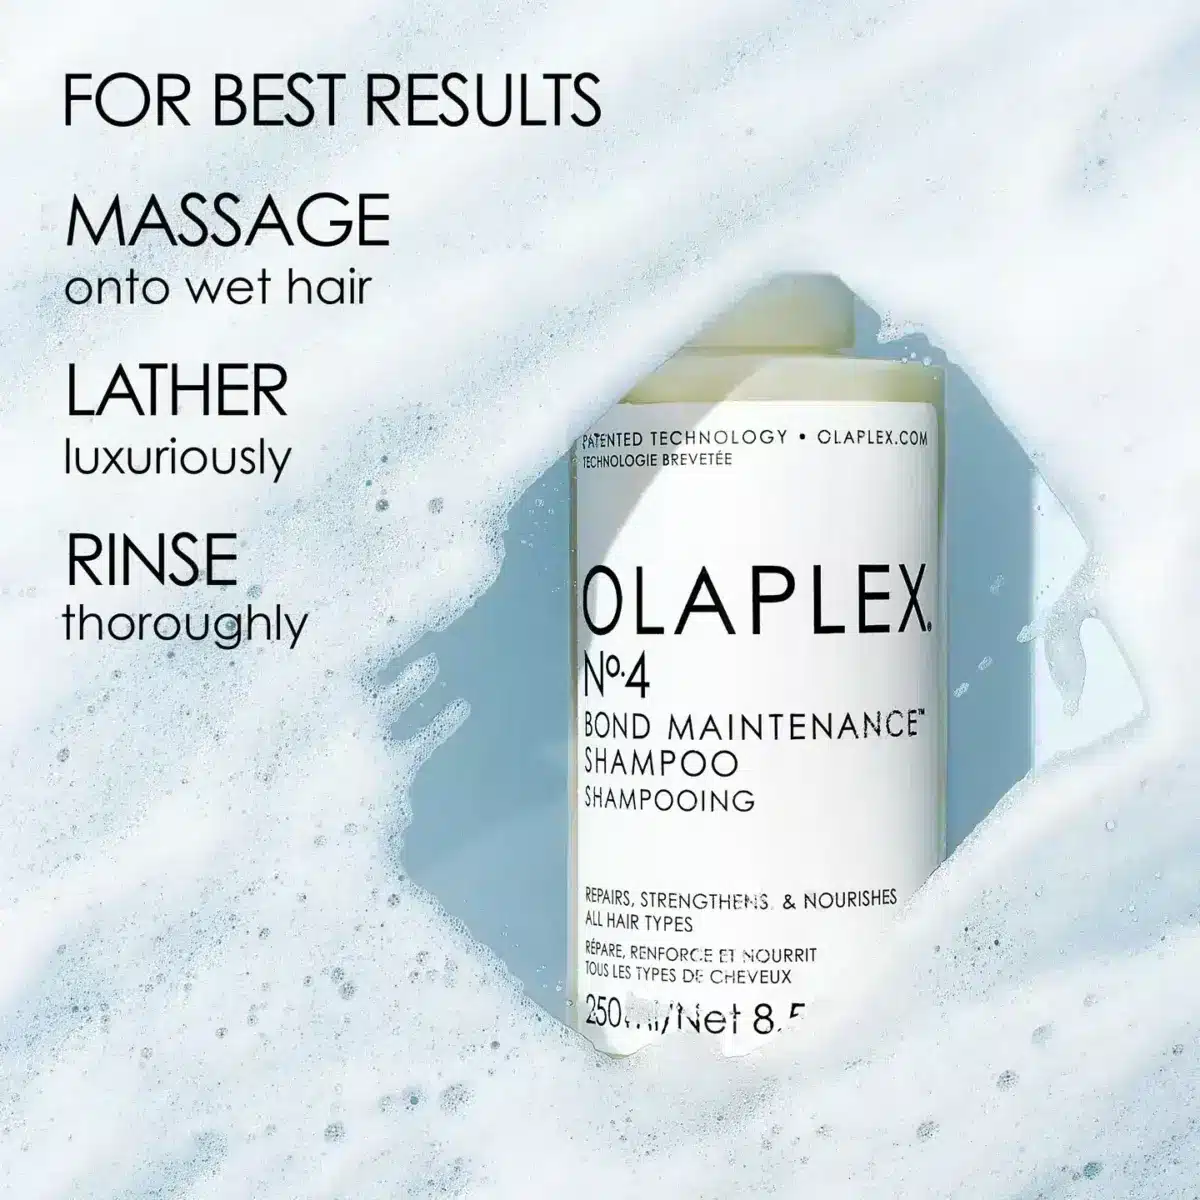 Olaplex No. 4 Bond Maintenance Shampoo 250ml